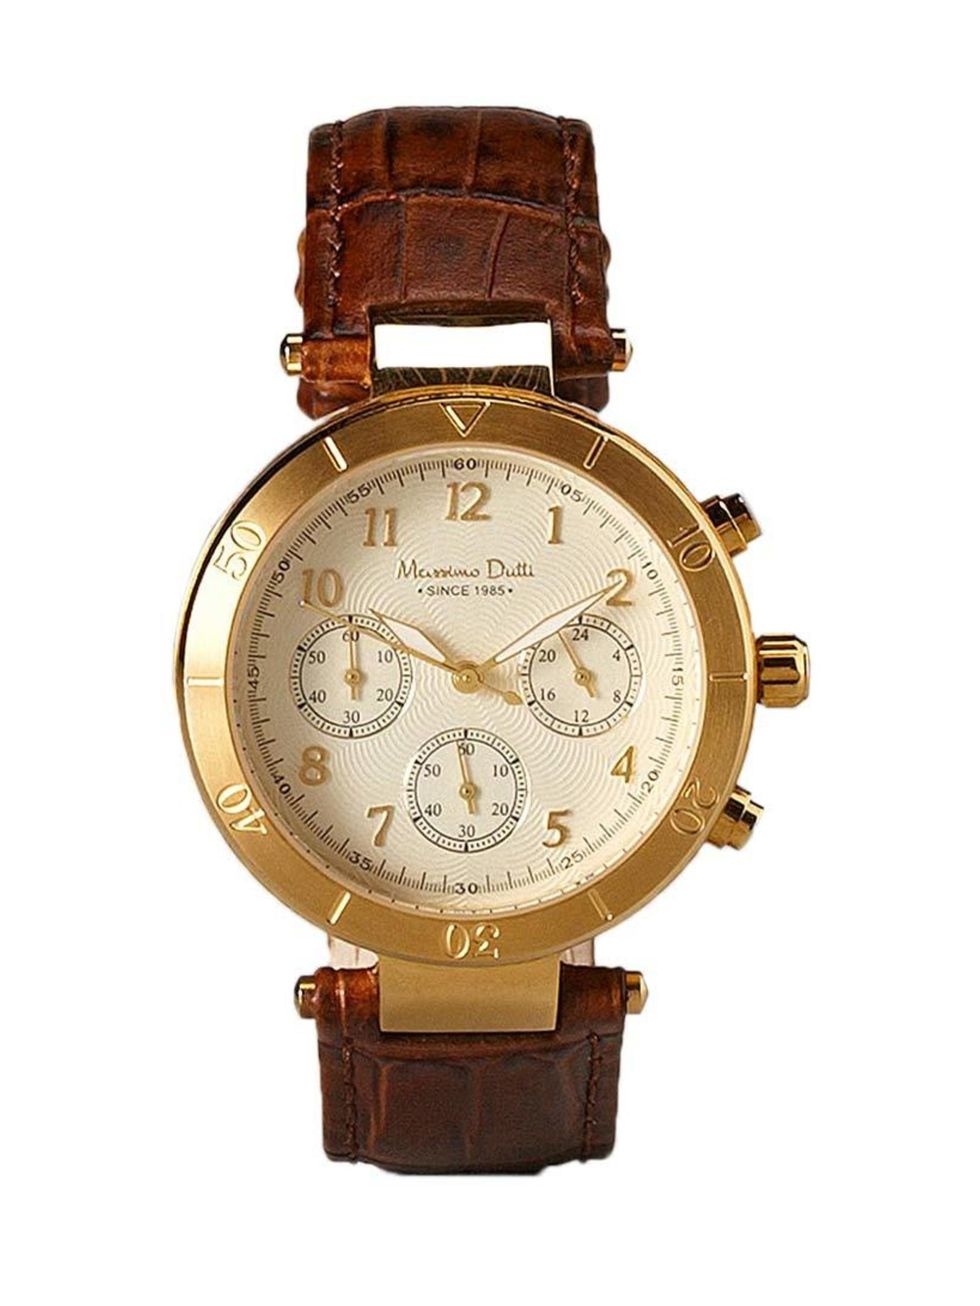 <p>This elegant watch is Fashion Intern Billie Bhatia's latest arm candy.</p>

<p><a href="http://www.massimodutti.com/gb/en/women/accessories/watches/crocodile-chrono-watch-c891011p5438569.html?colorId=303" target="_blank">Massimo Dutti</a> watch, £105</